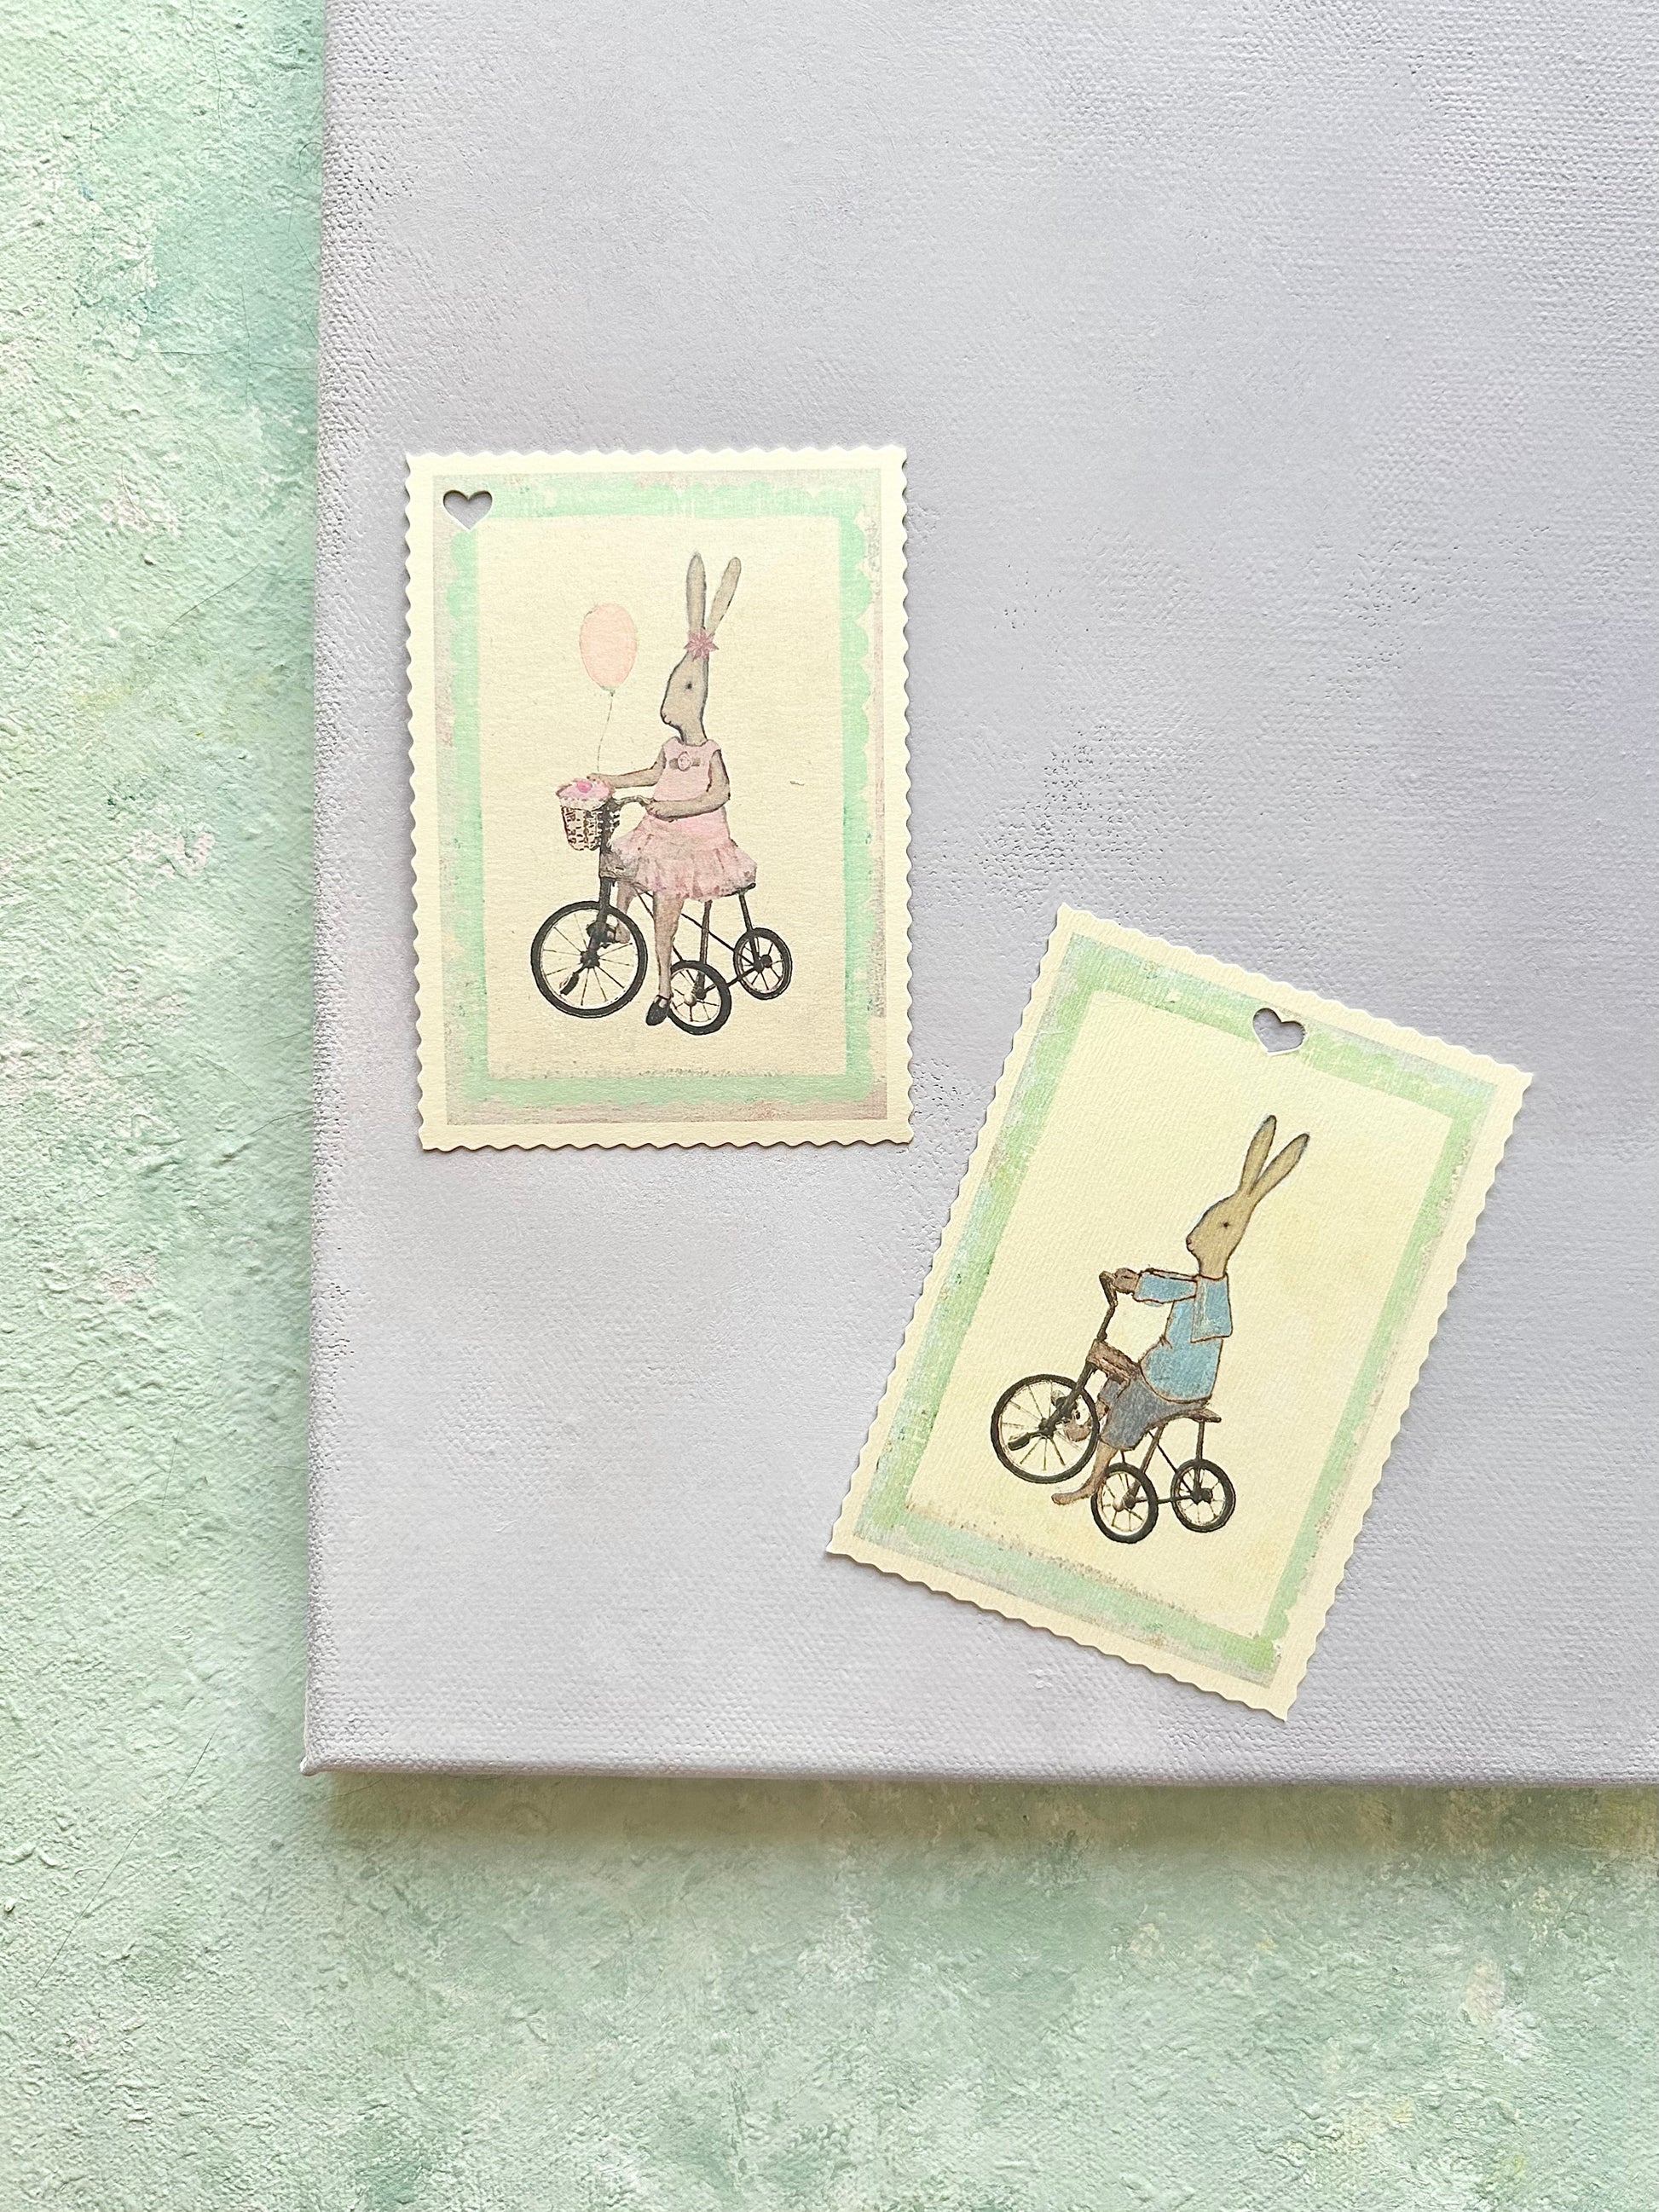 Mini Card "Rabbit Boy on Bike" - 2010